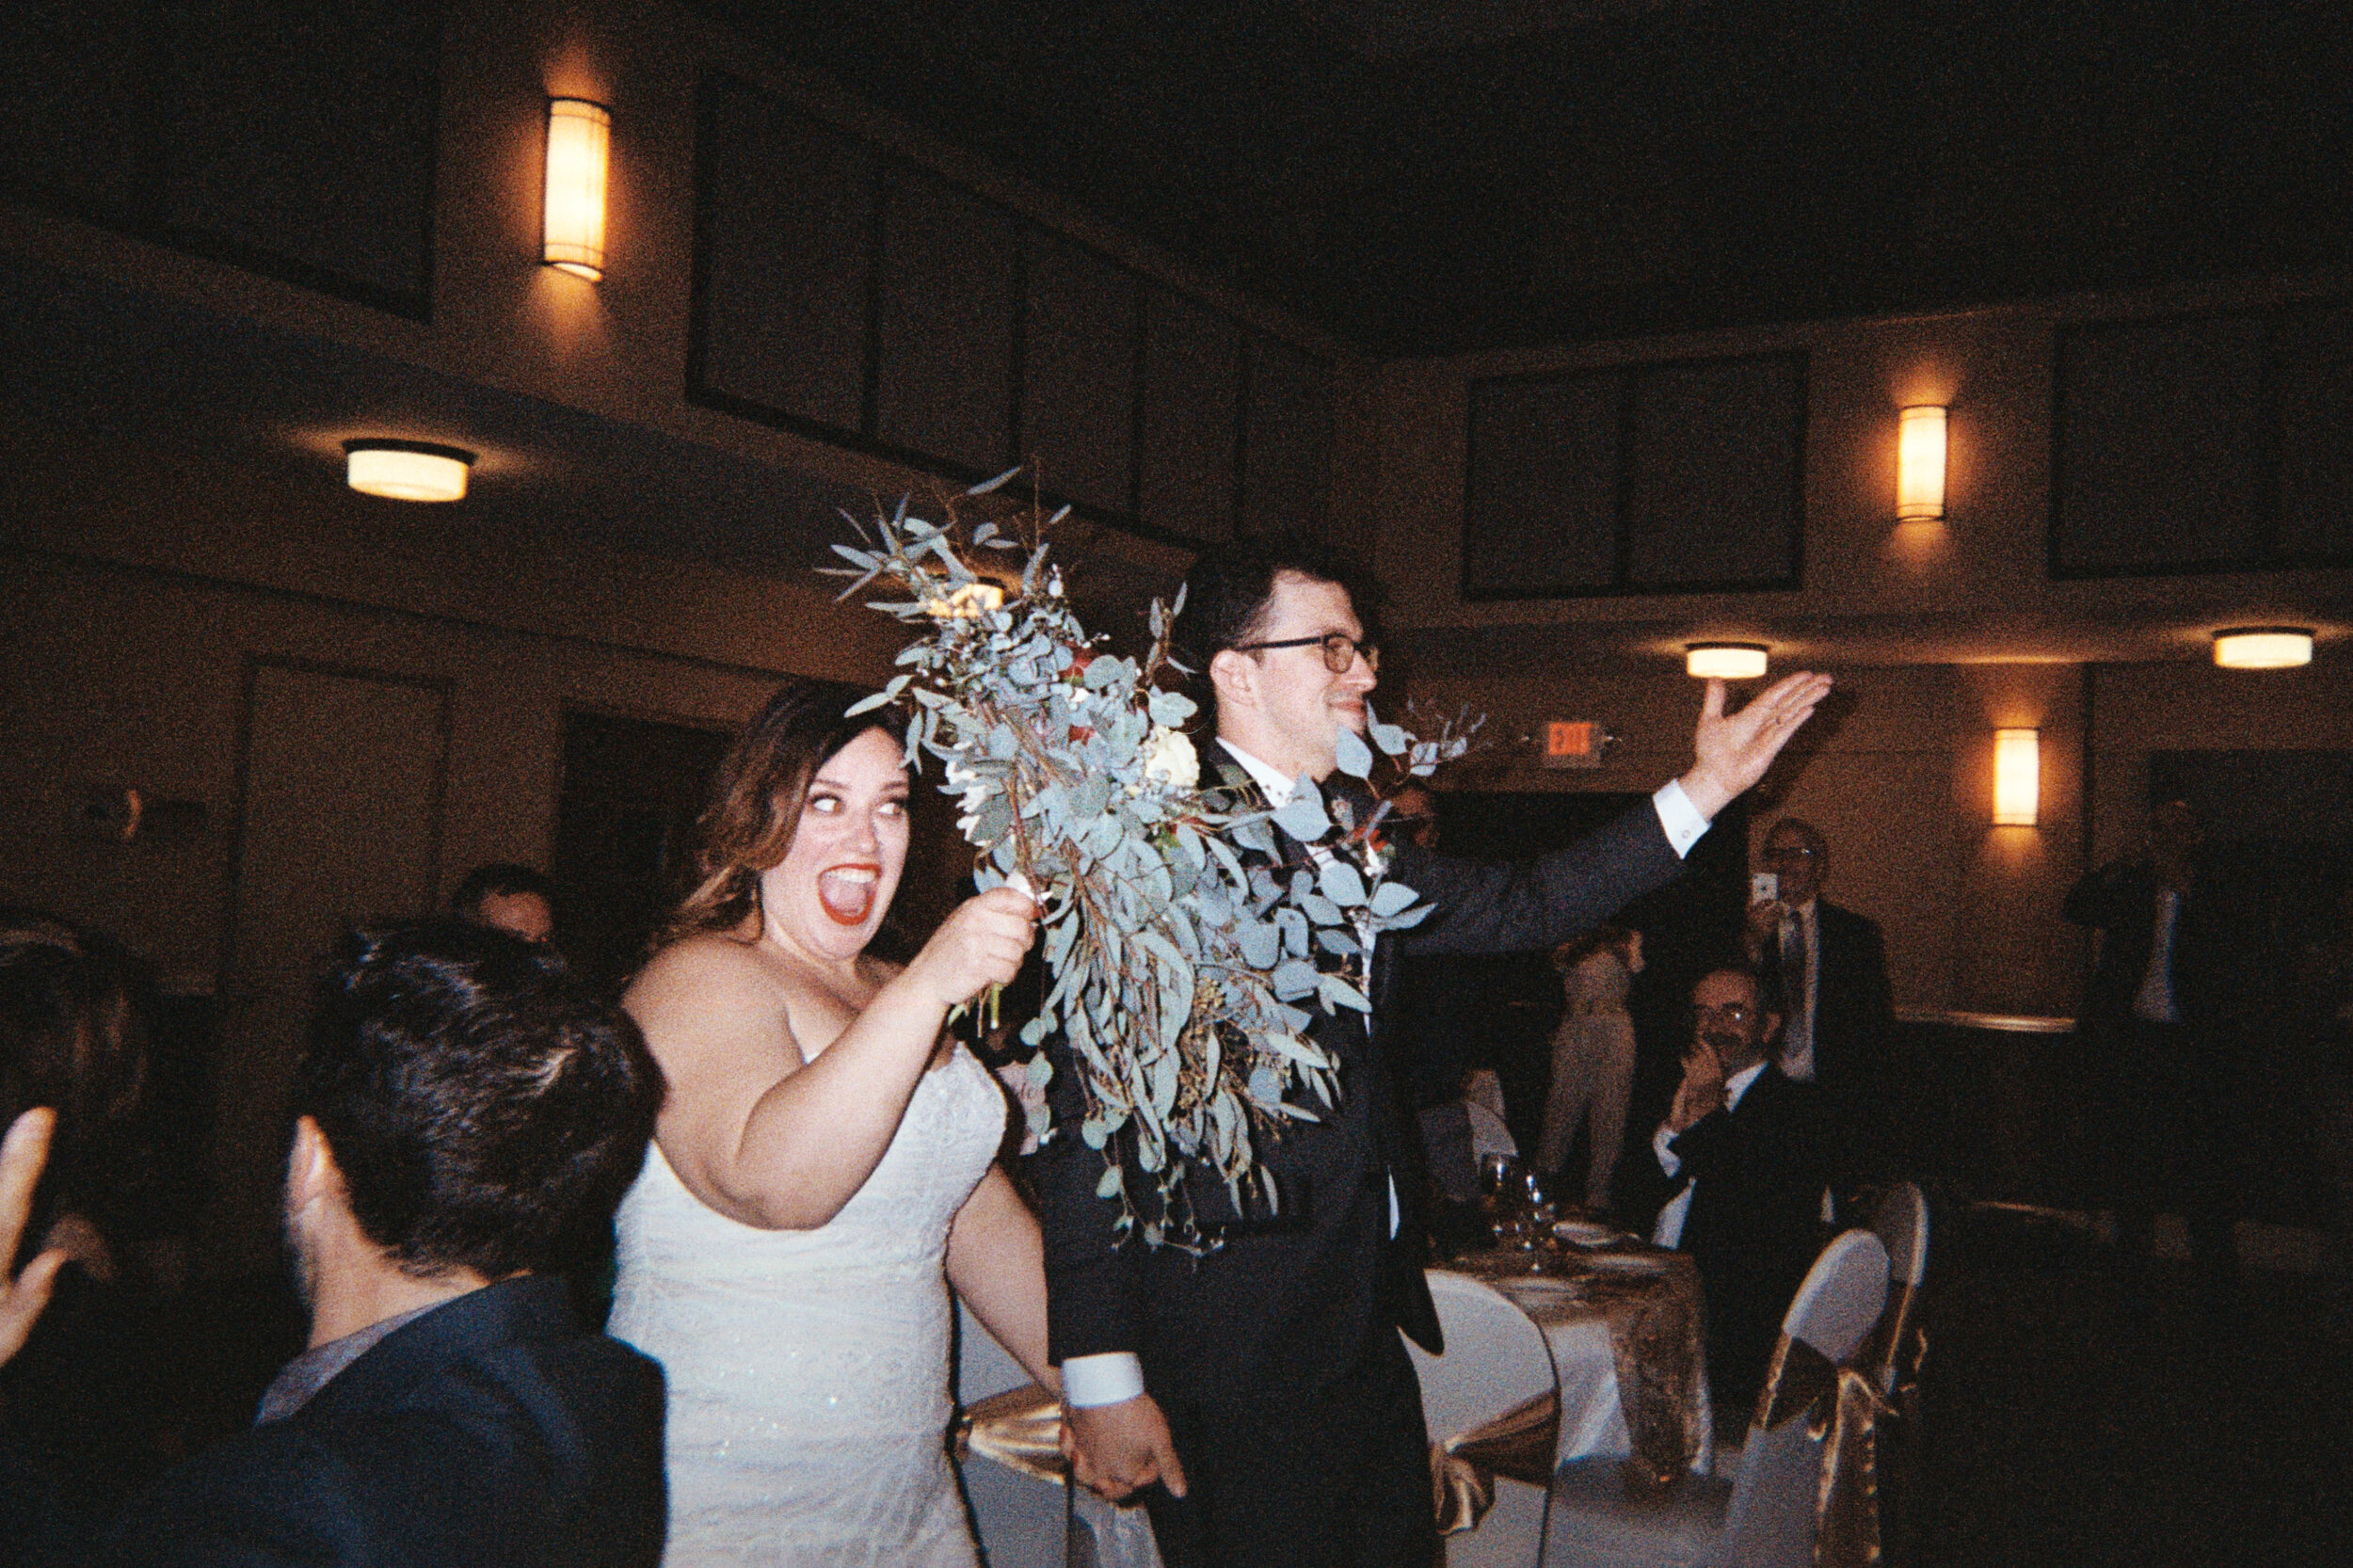 Pittsburgh NYC Film Wedding Photographer - Rat Lab - Lawrenceville - Stephanie Dave195.jpg